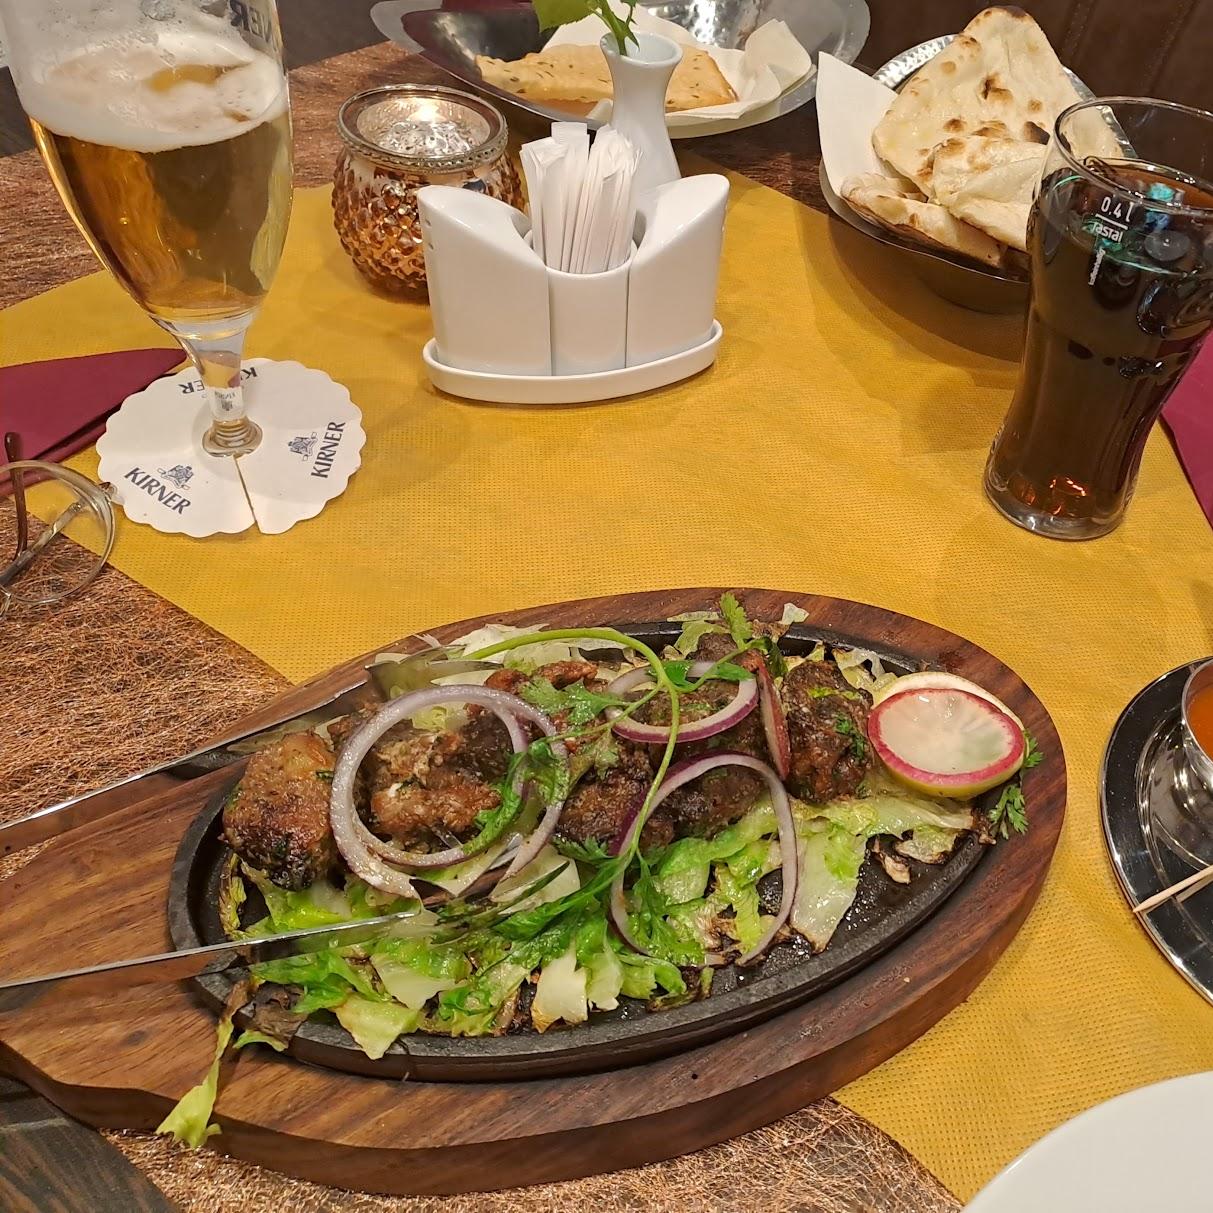 Restaurant "Taste of India" in Idar-Oberstein